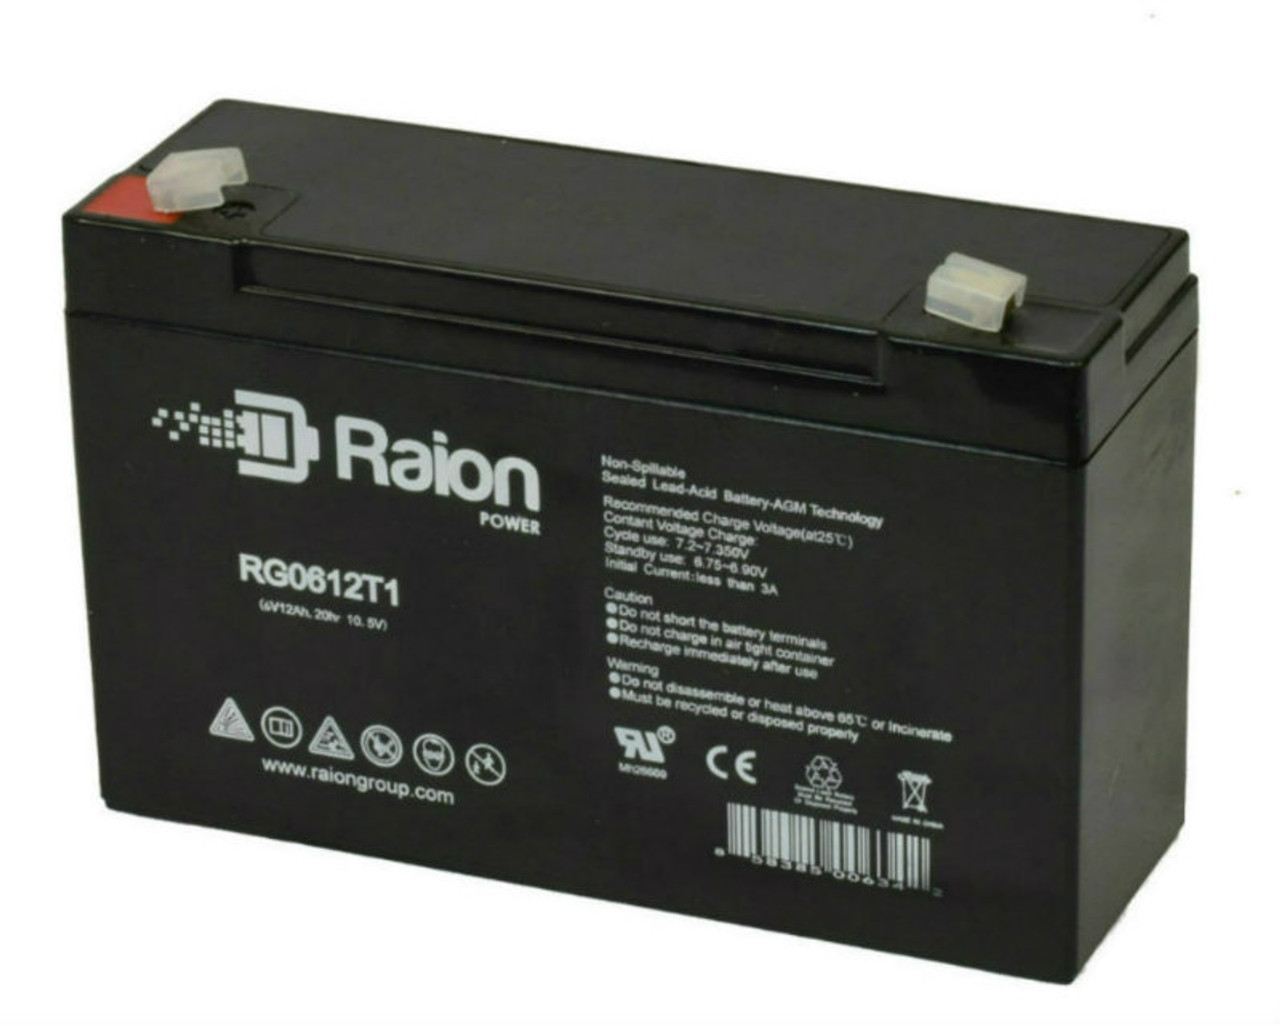 Raion Power RG06120T1 Replacement 6V 12Ah Emergency Light Battery for Sonnenschein M100